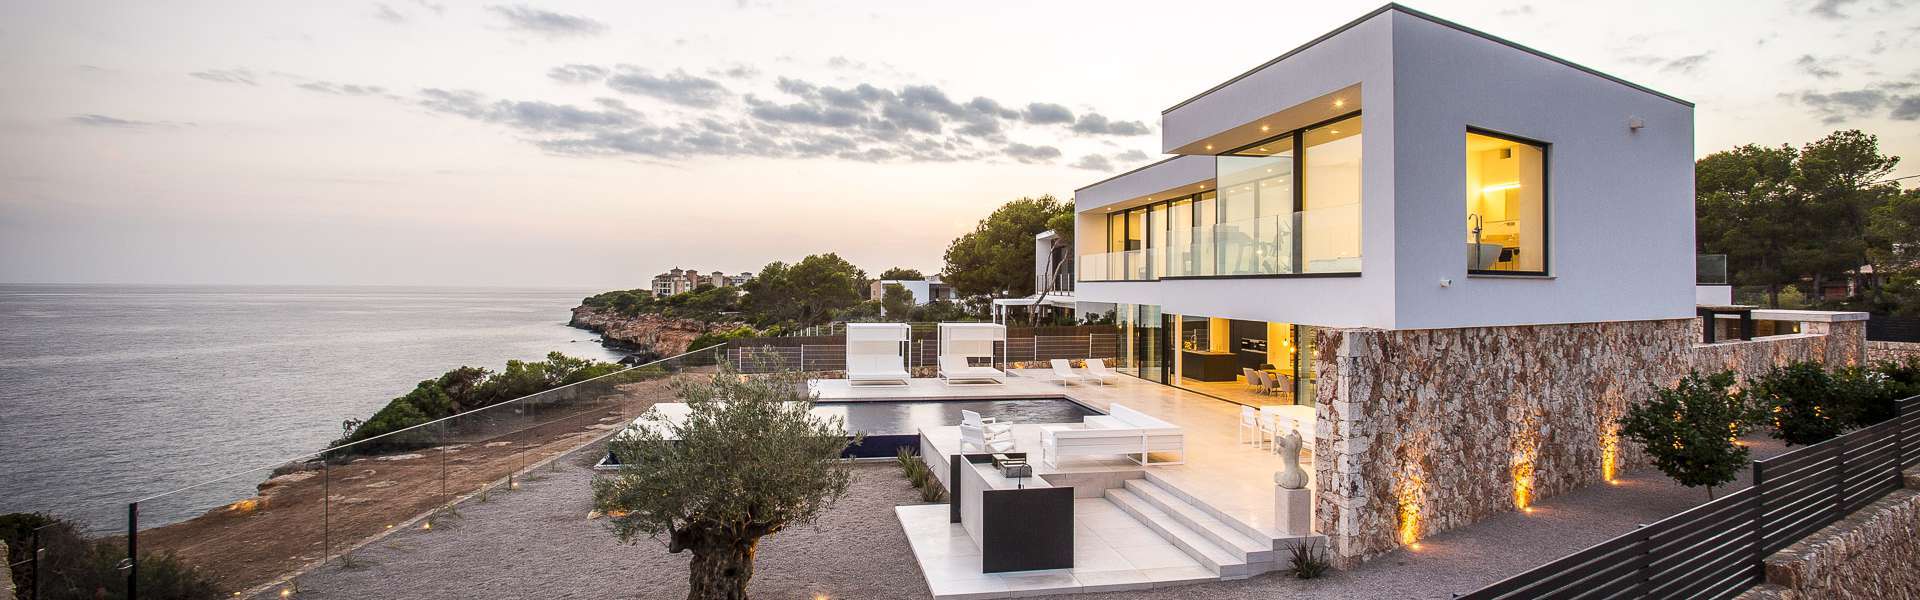 Cala Pi -  Exclusive villa at the seaside